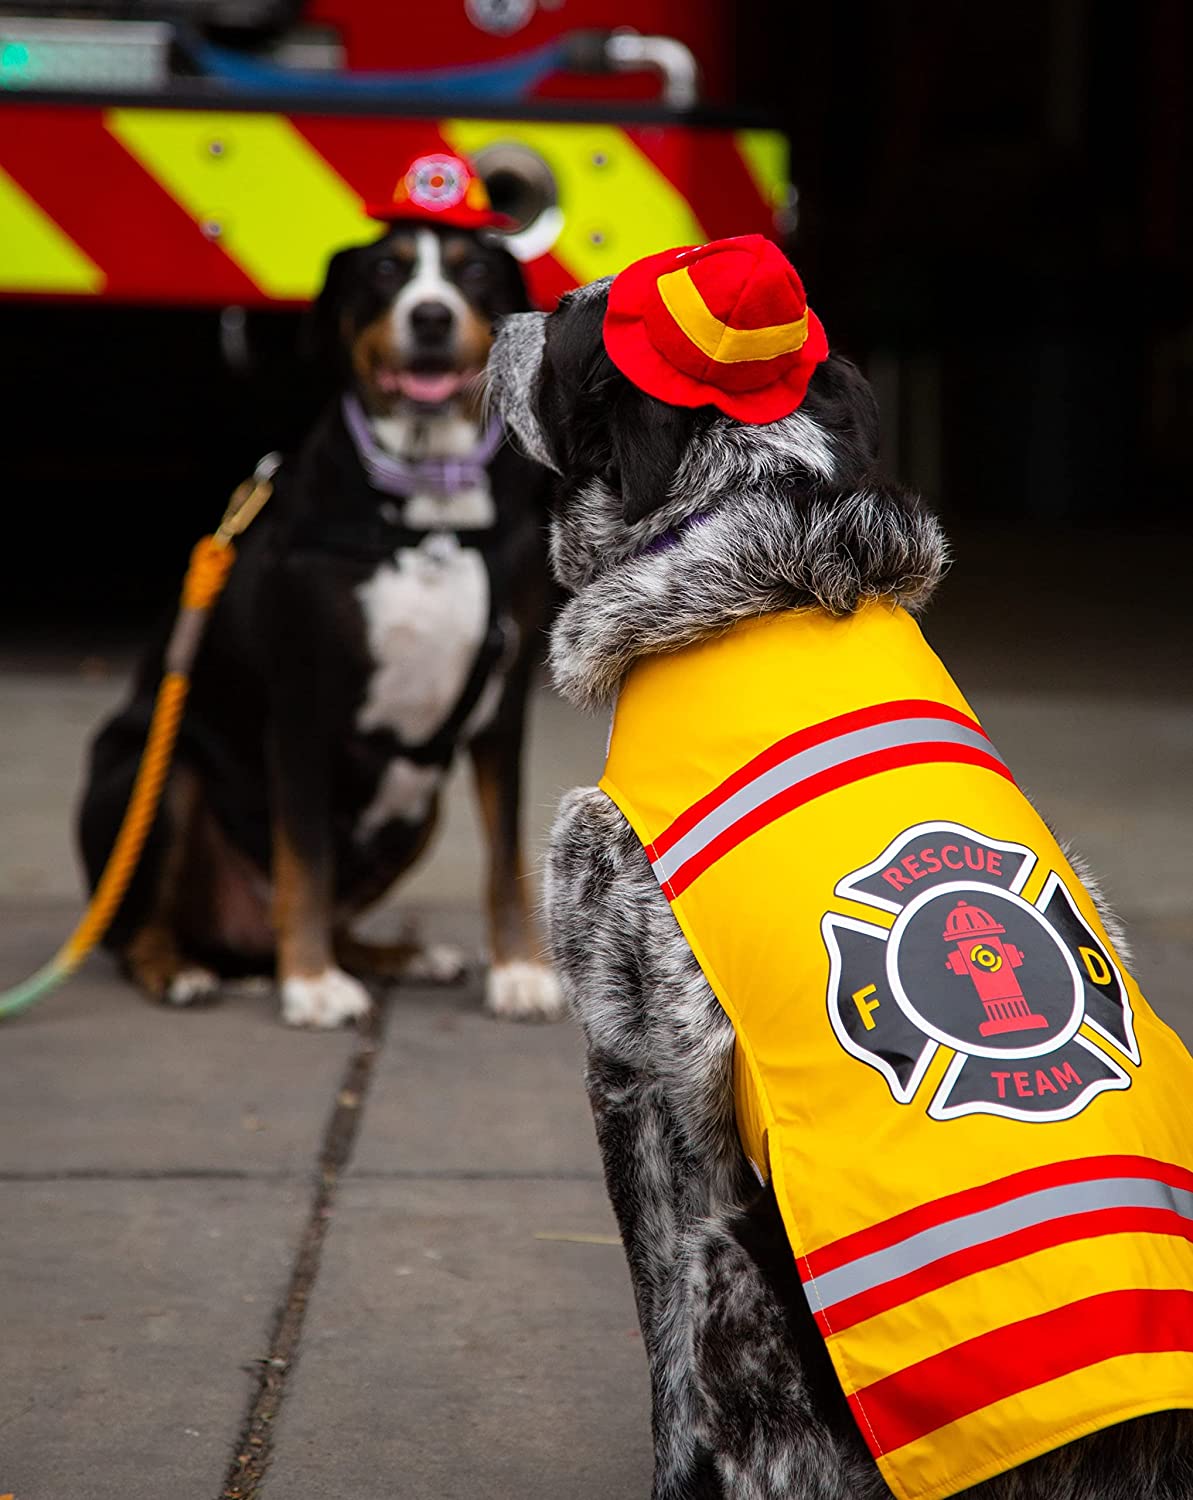 Dog Firefighter Costume-DogsTailCircle